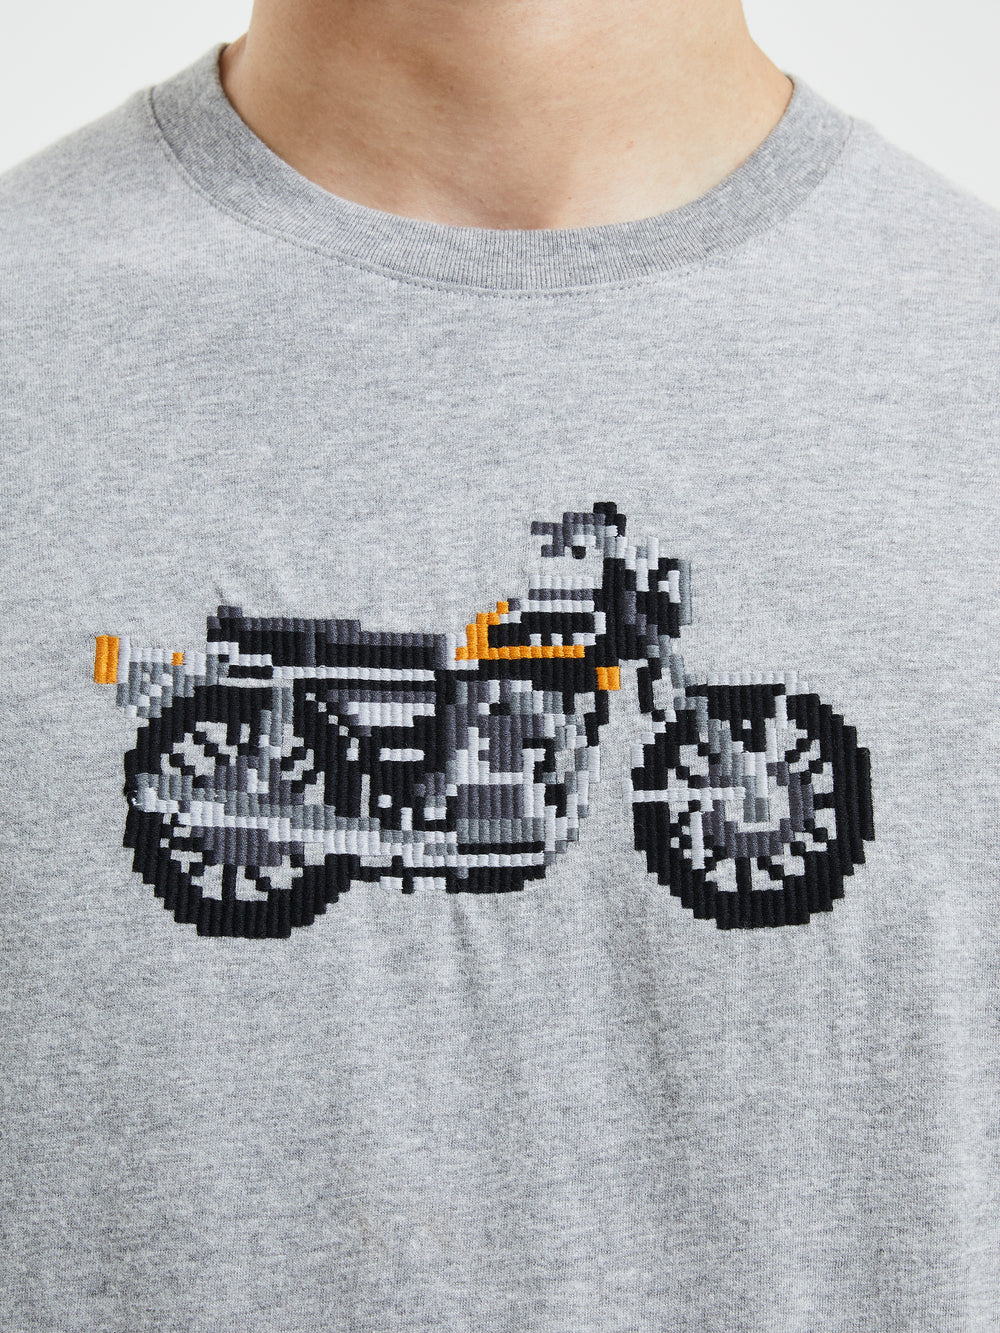 T-shirt Moto Cross - Pixel Evolution - Homme Gris chine